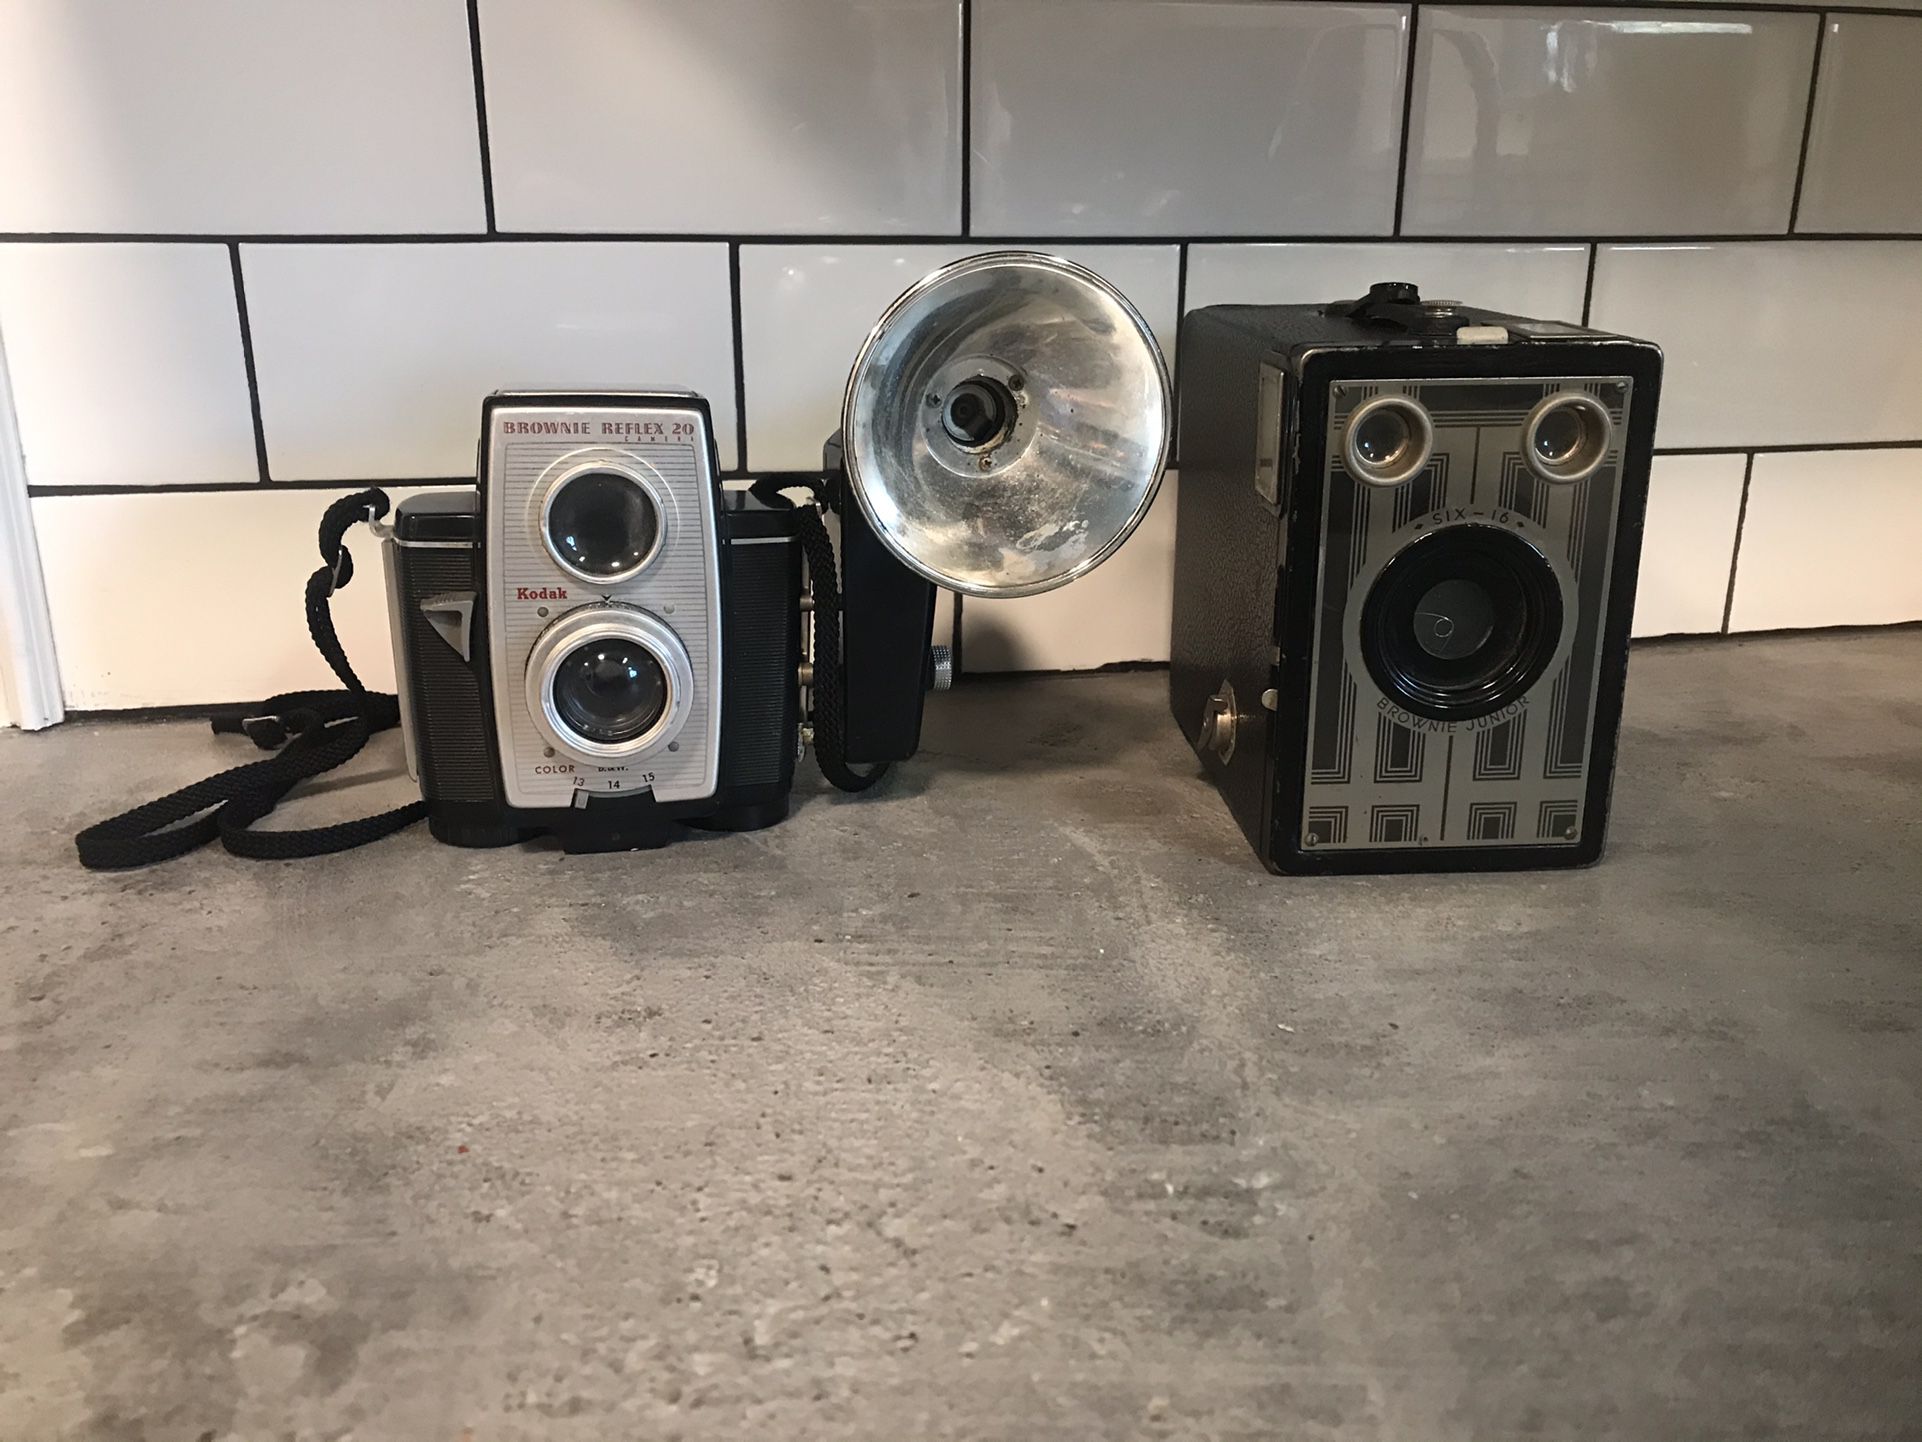 Two Vintage Kodak Cameras - Brownie Reflex and Brownie Junior